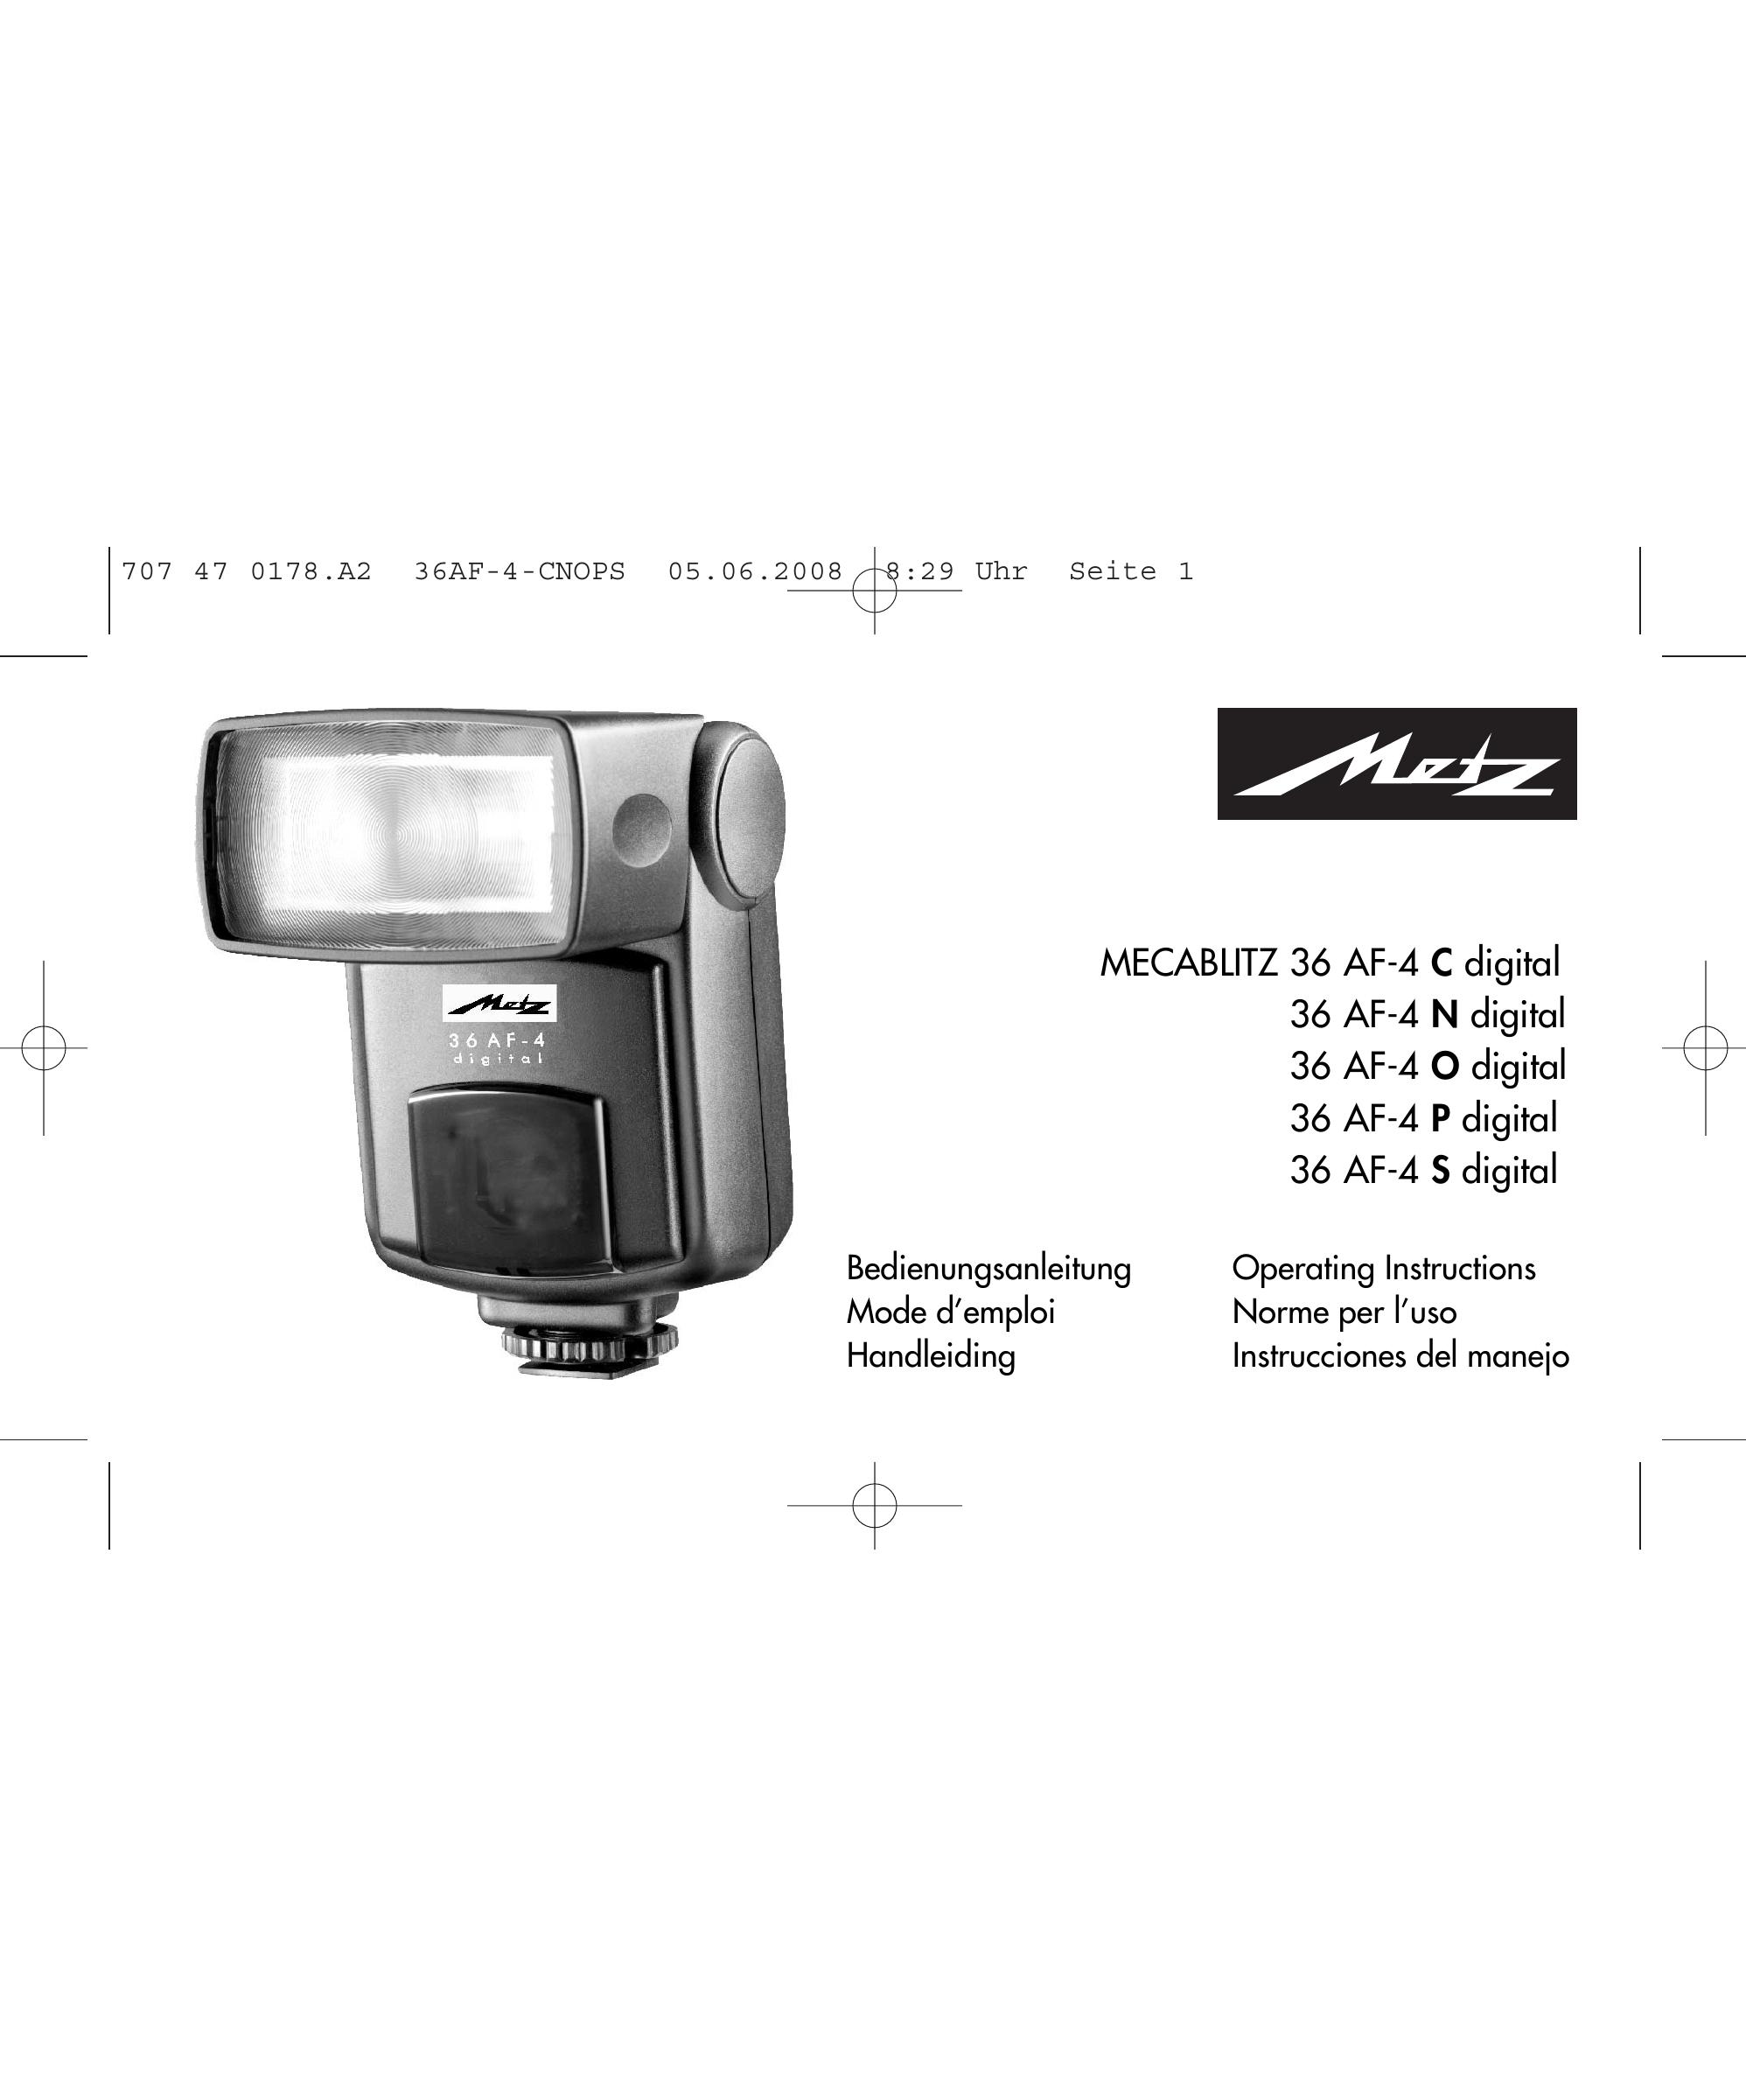 Metz 36 AF-4 S Digital Camera User Manual